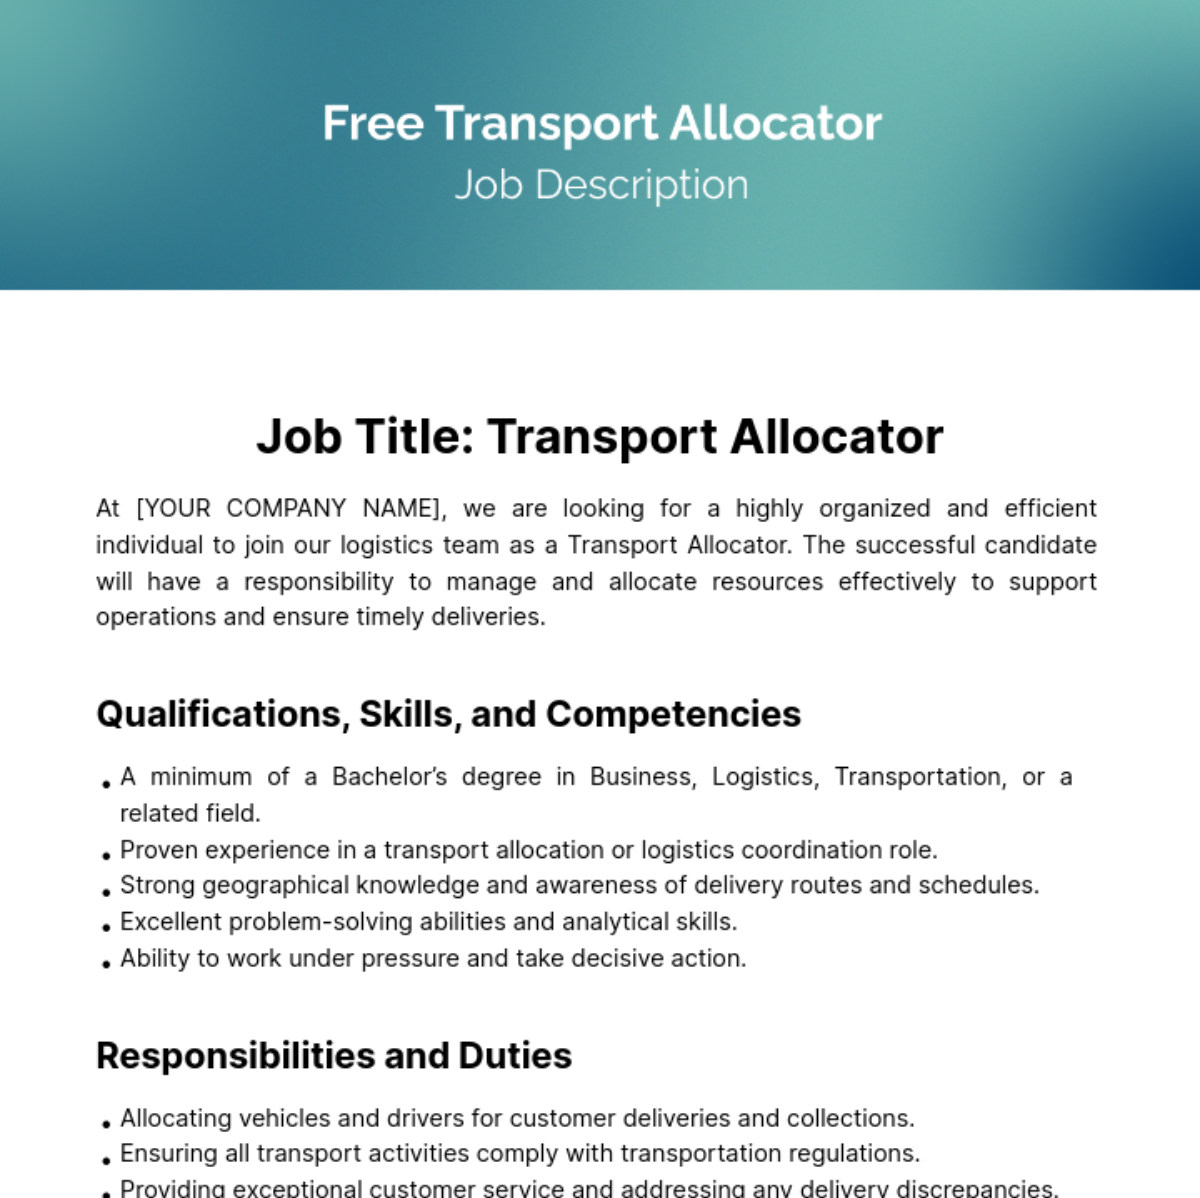 Transport Allocator Job Description Template